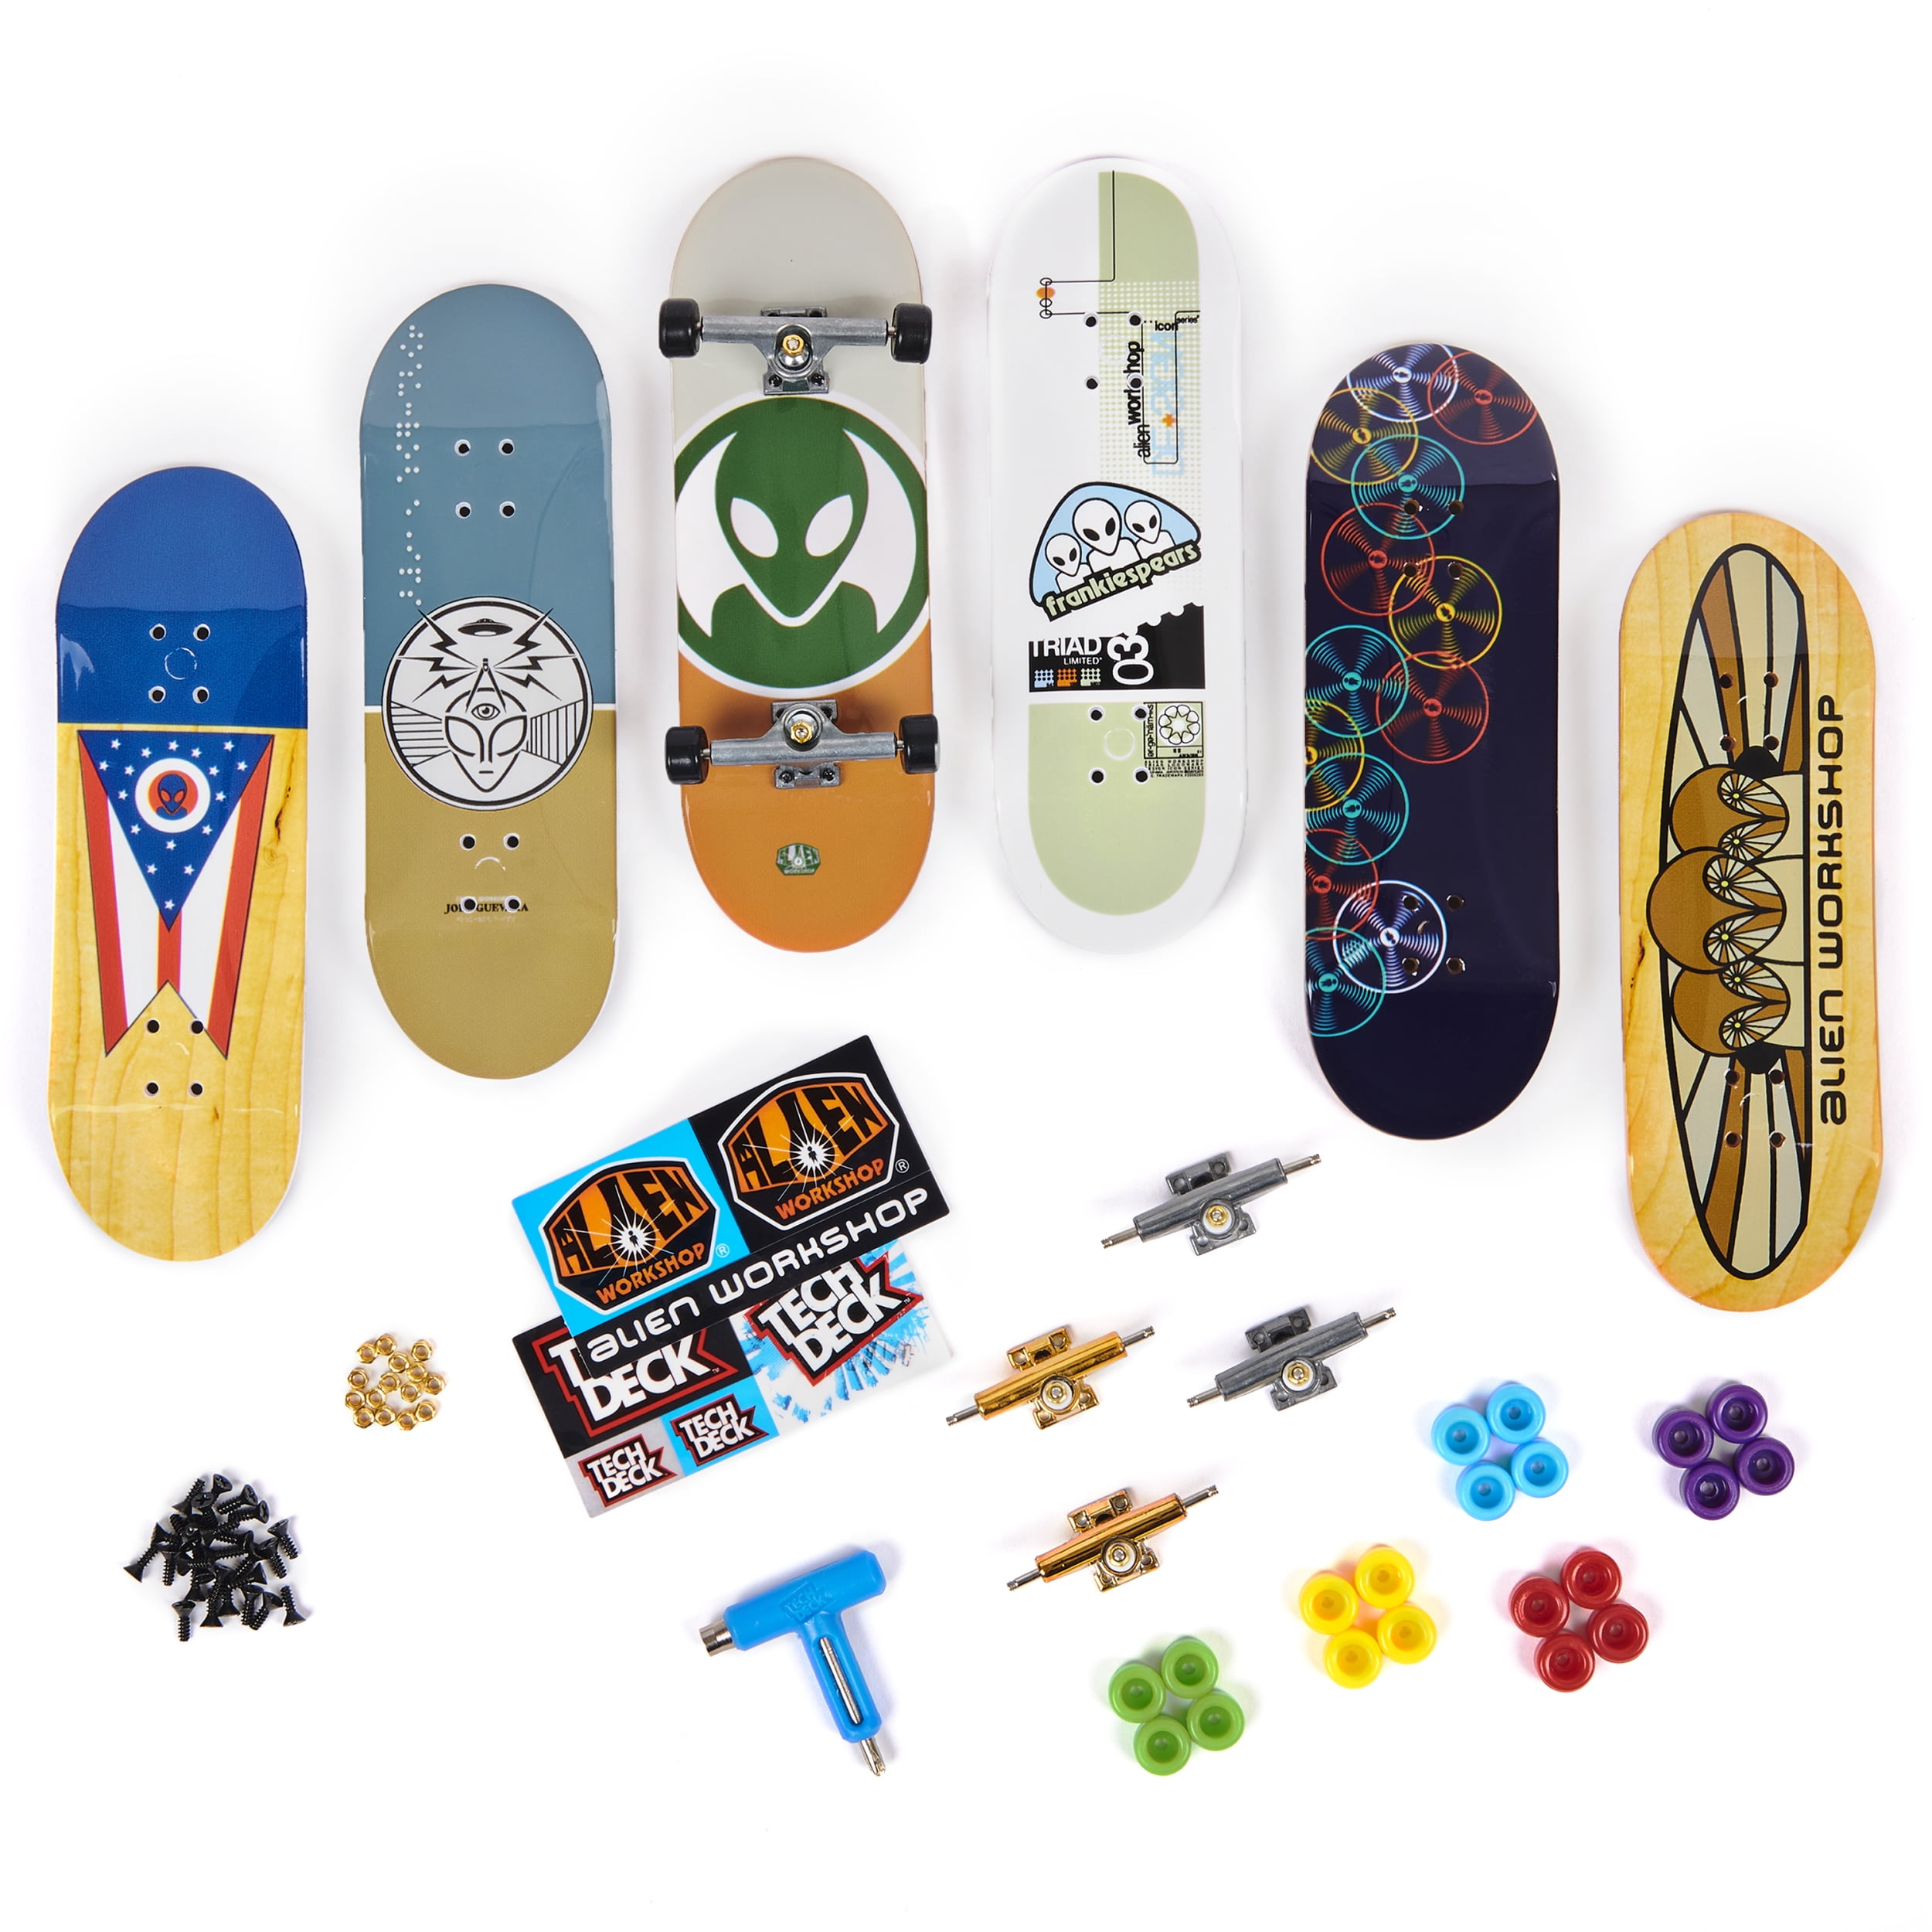 Details about   3 NEW Tech Deck Skateboard Fingerboard Sheckler Warehouses #02 #03 #04 Plus 3pk 